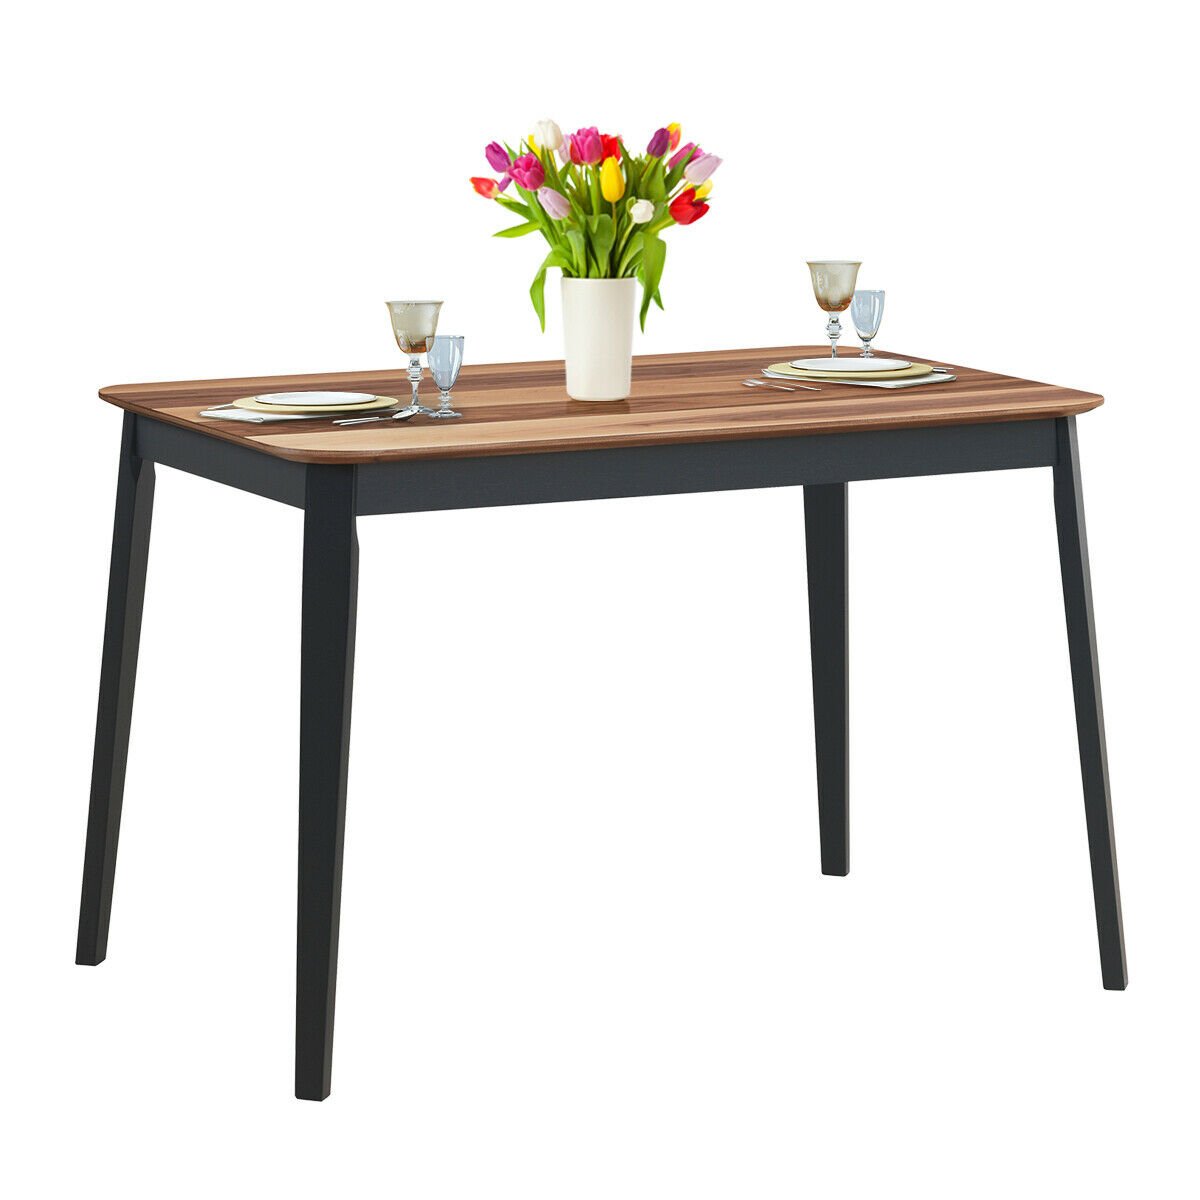 Mid Century Modern Rectangular Dining Room Table W/ Solid Wooden Legs Walnut